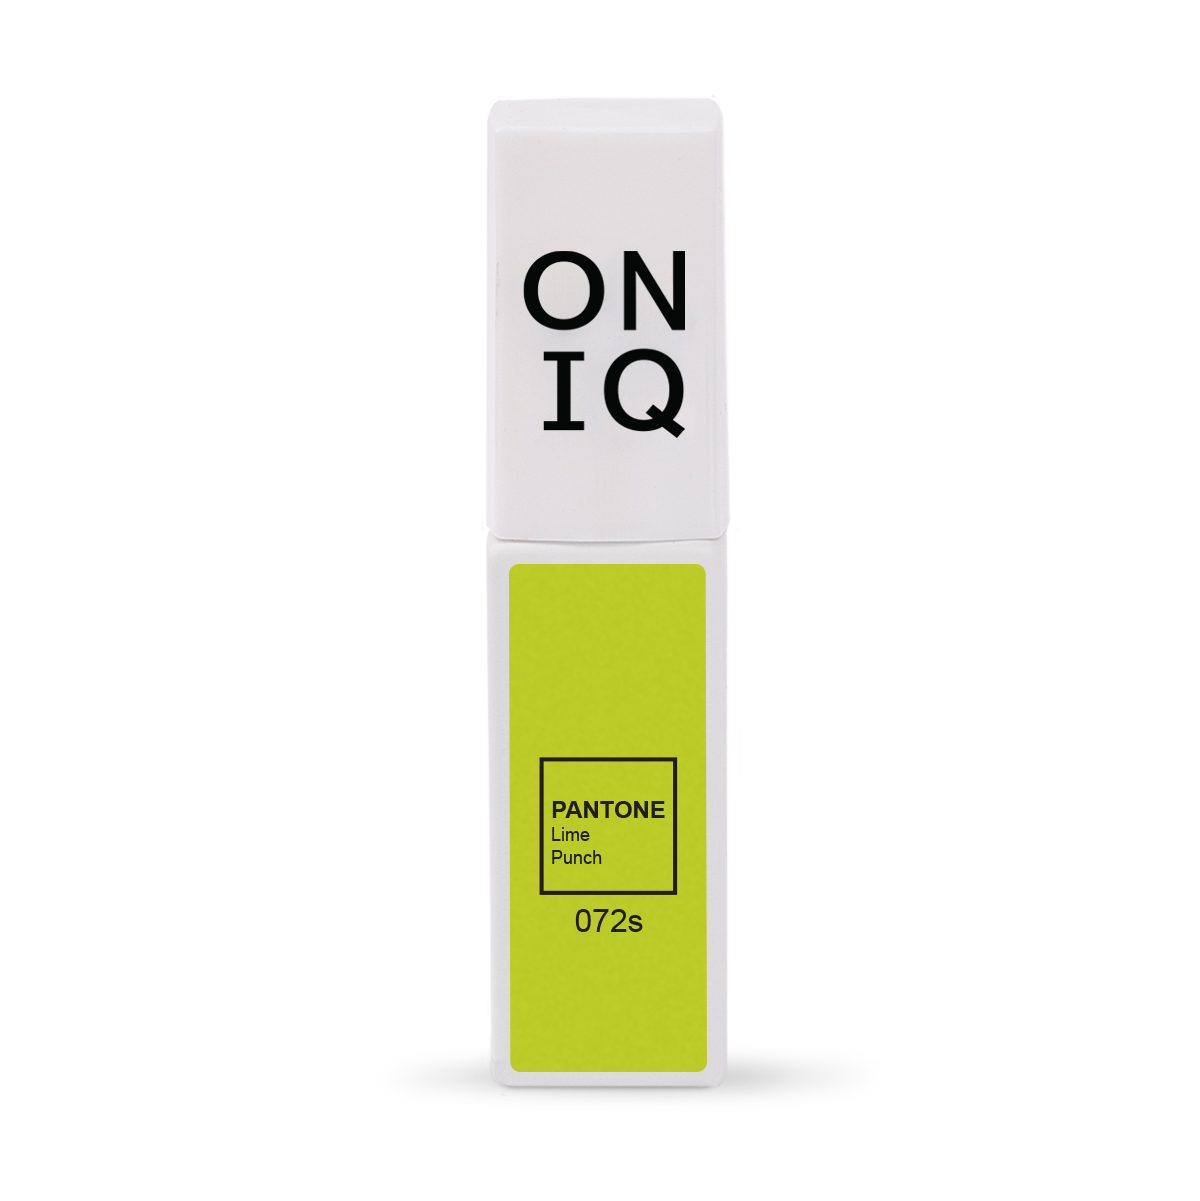 ONIQ Гель-лак для покрытия ногтей, Pantone: Lime punch, 6 мл